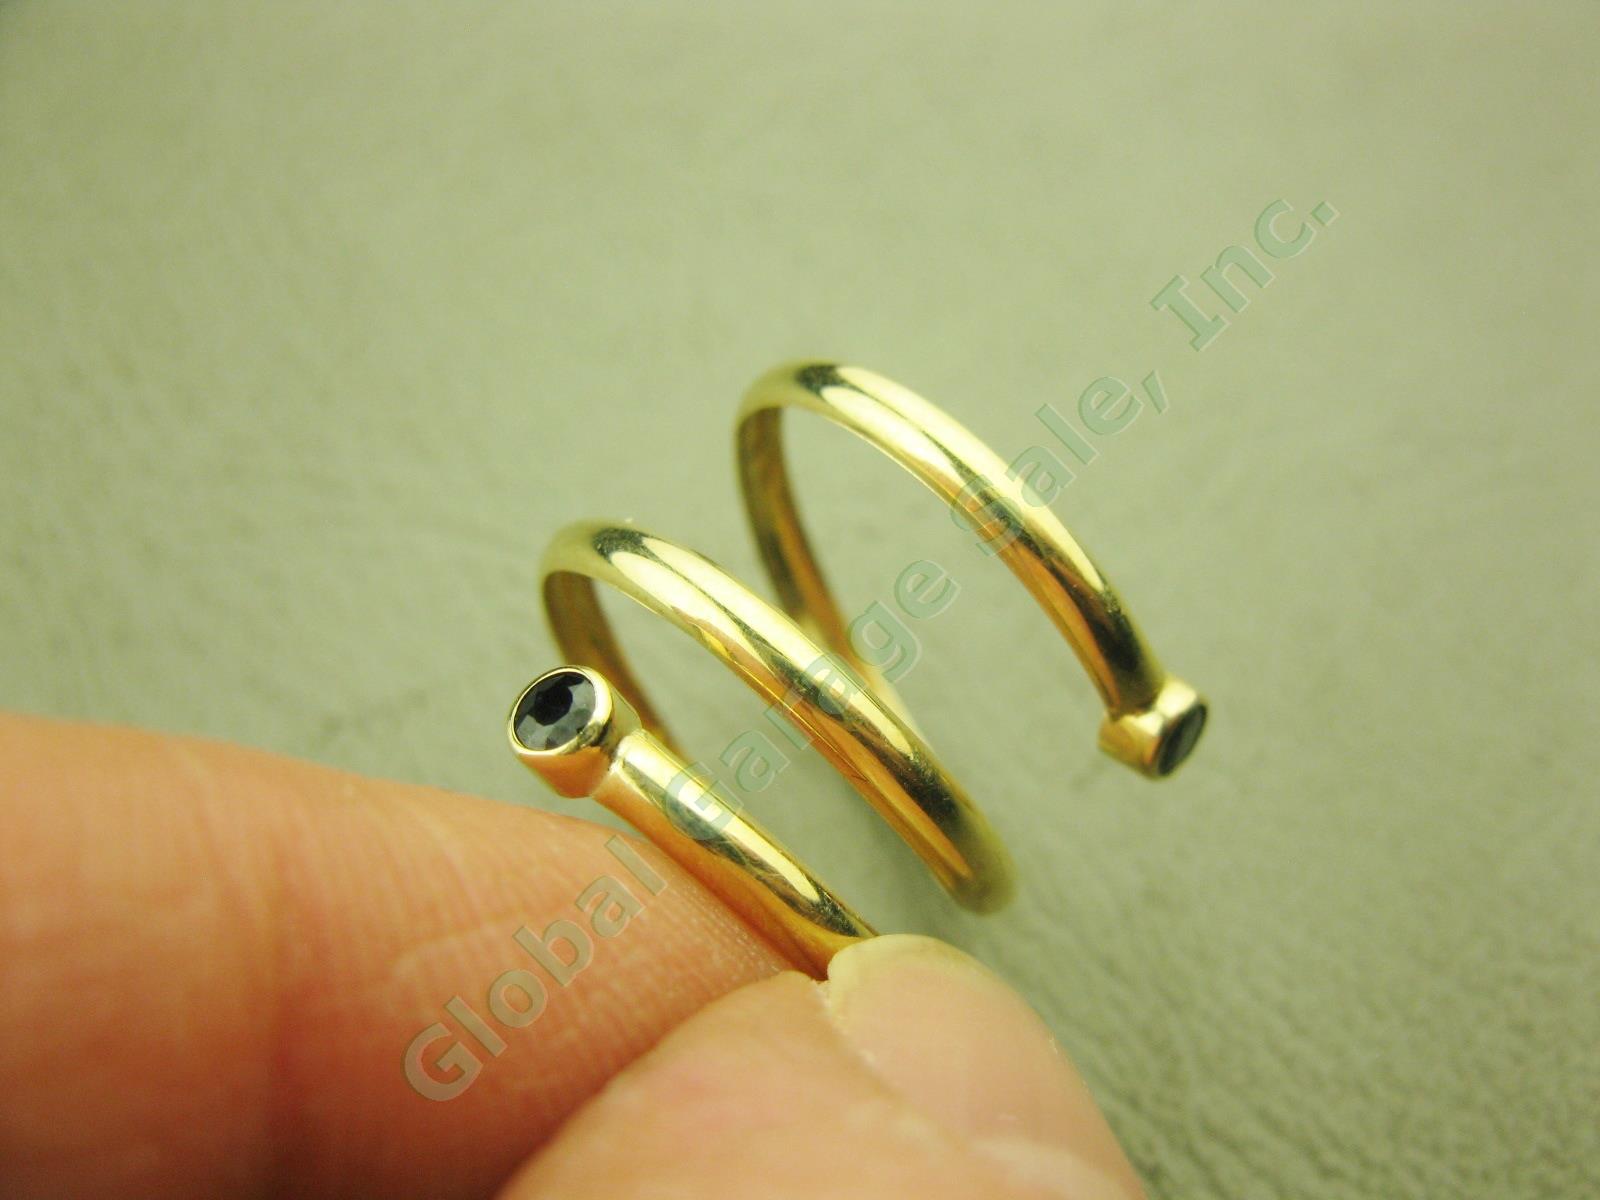 19x 14k 10k Gold Gemstone Rings Lot Earrings 57.7 Grams Not Scrap $1200+ Value!! 22